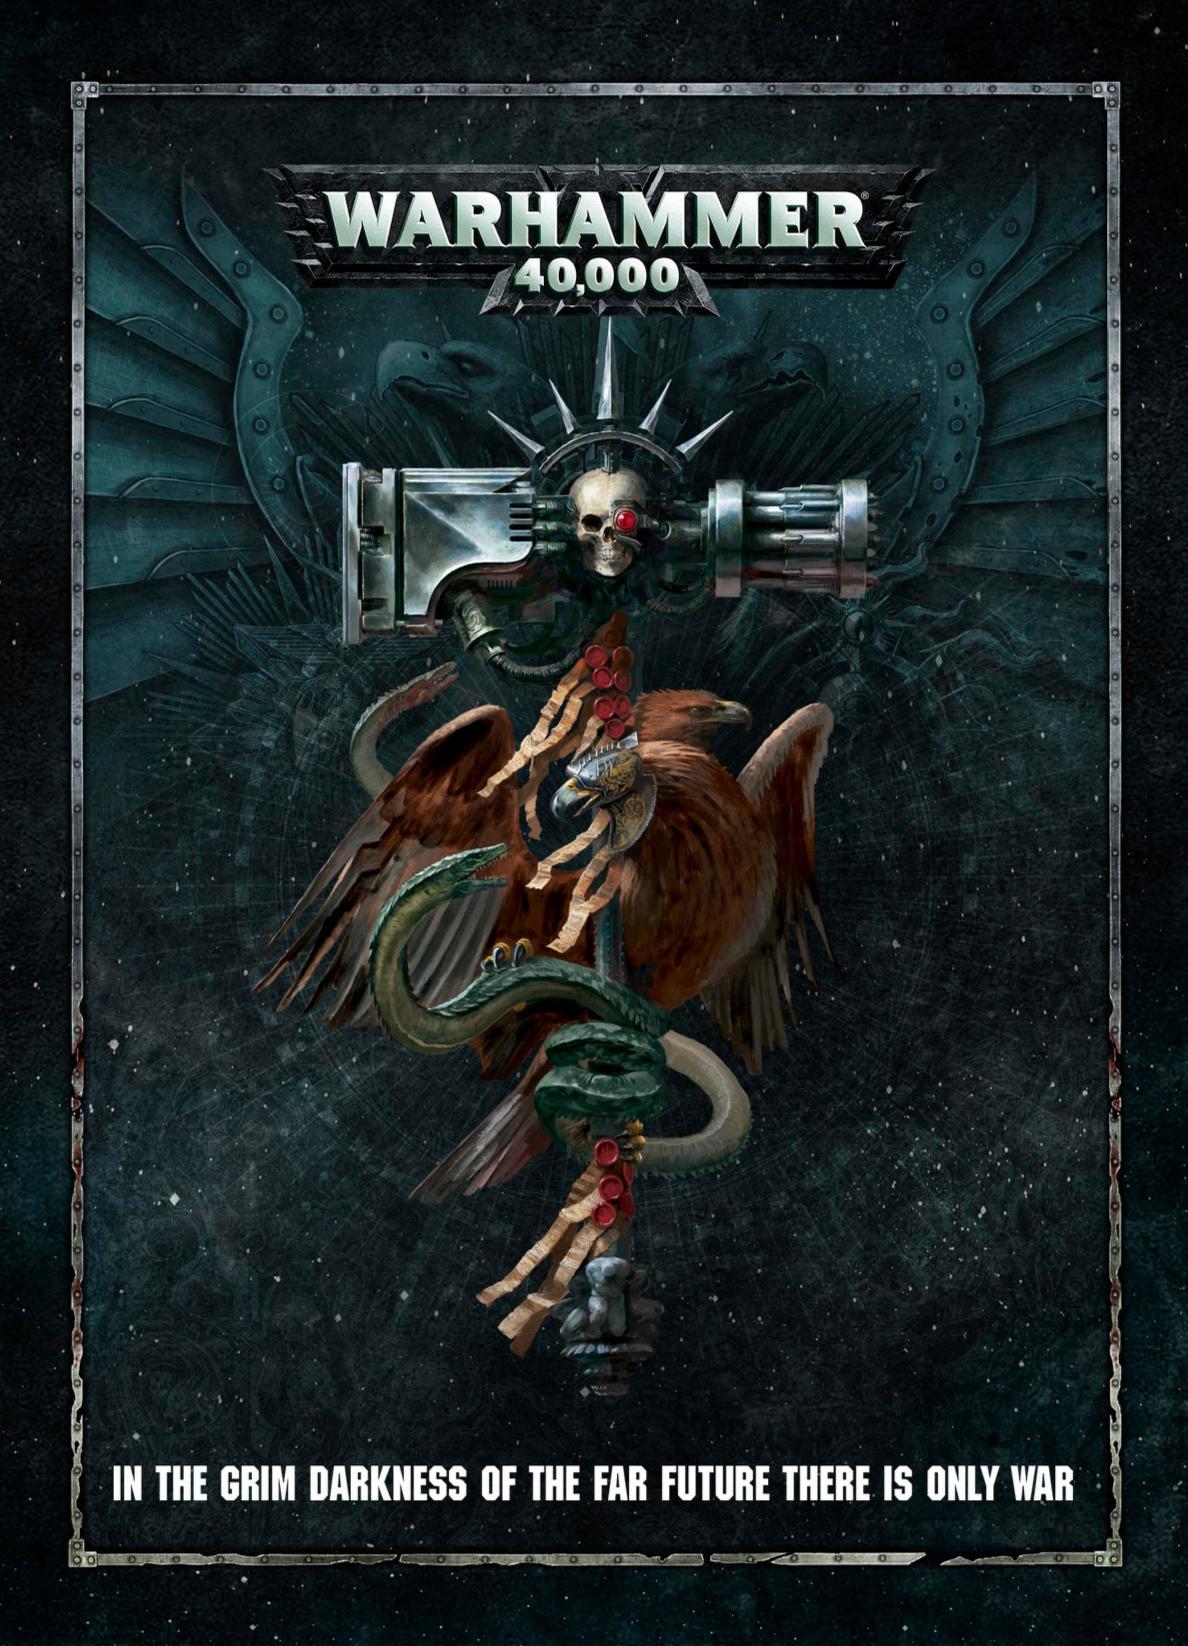 Can I find Warhammer 40k books in online ebook format?